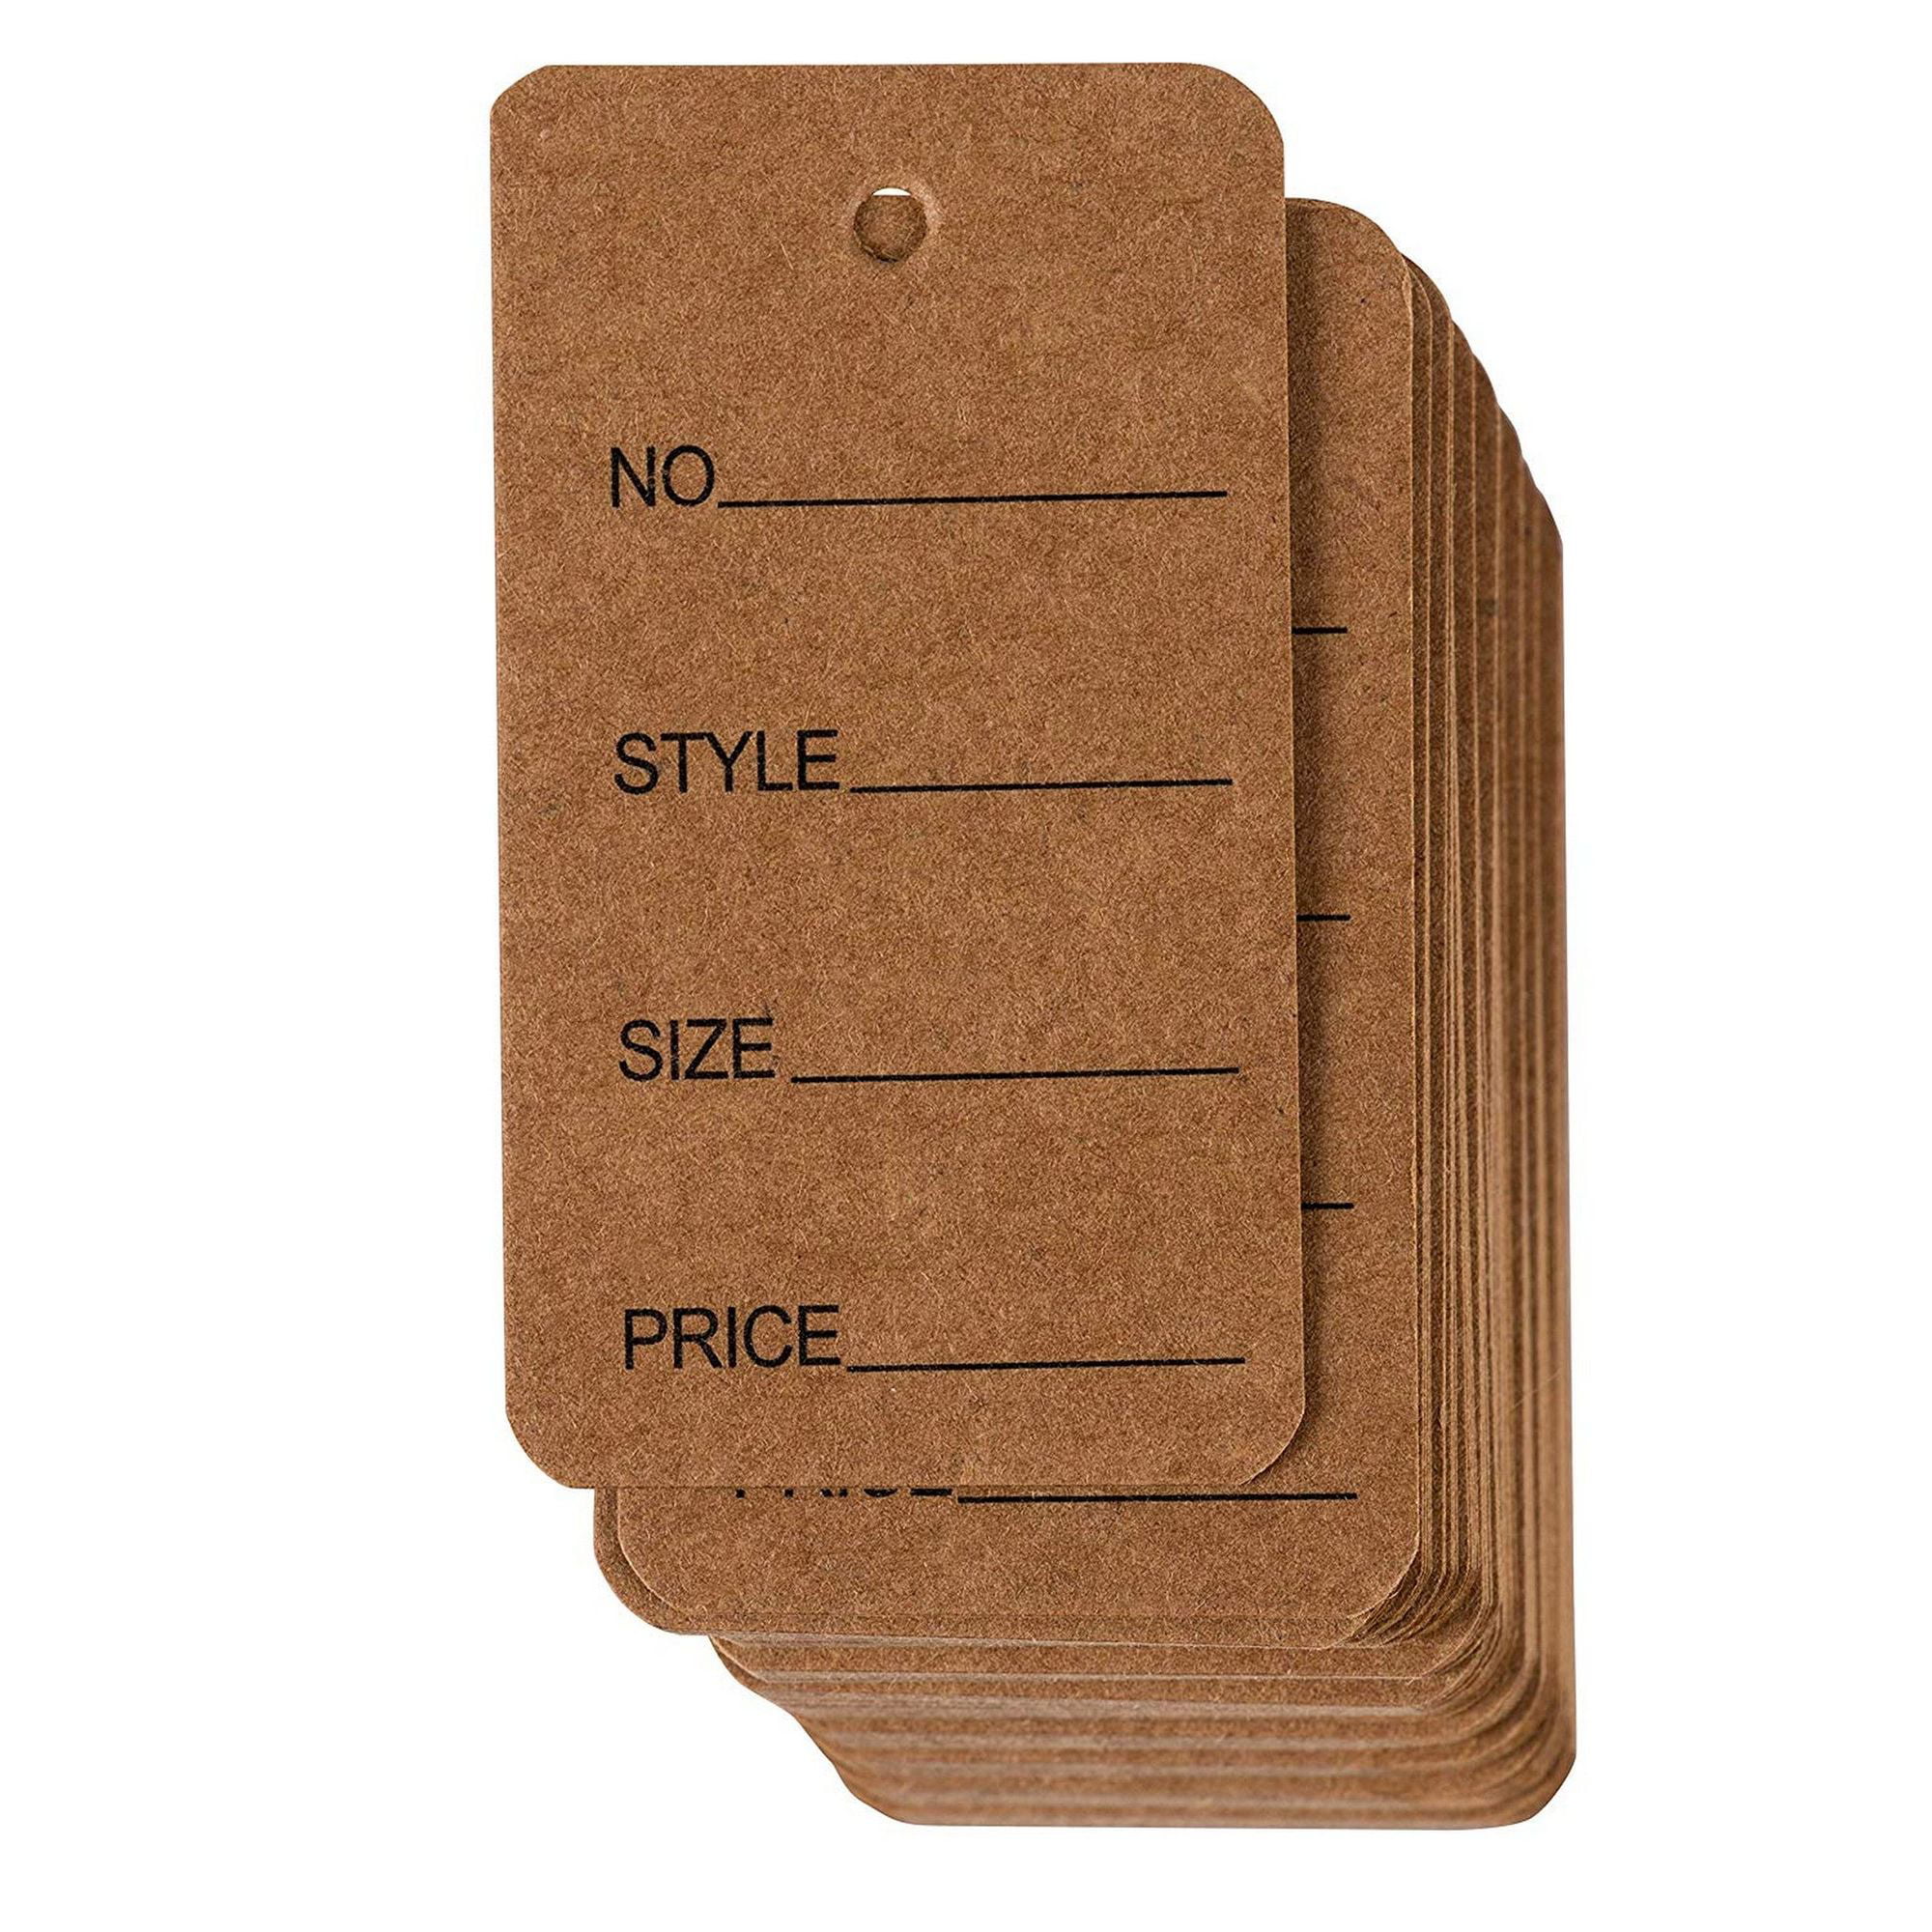 price-tags-1000-pack-cloth-tags-garment-tags-writable-tags-hang